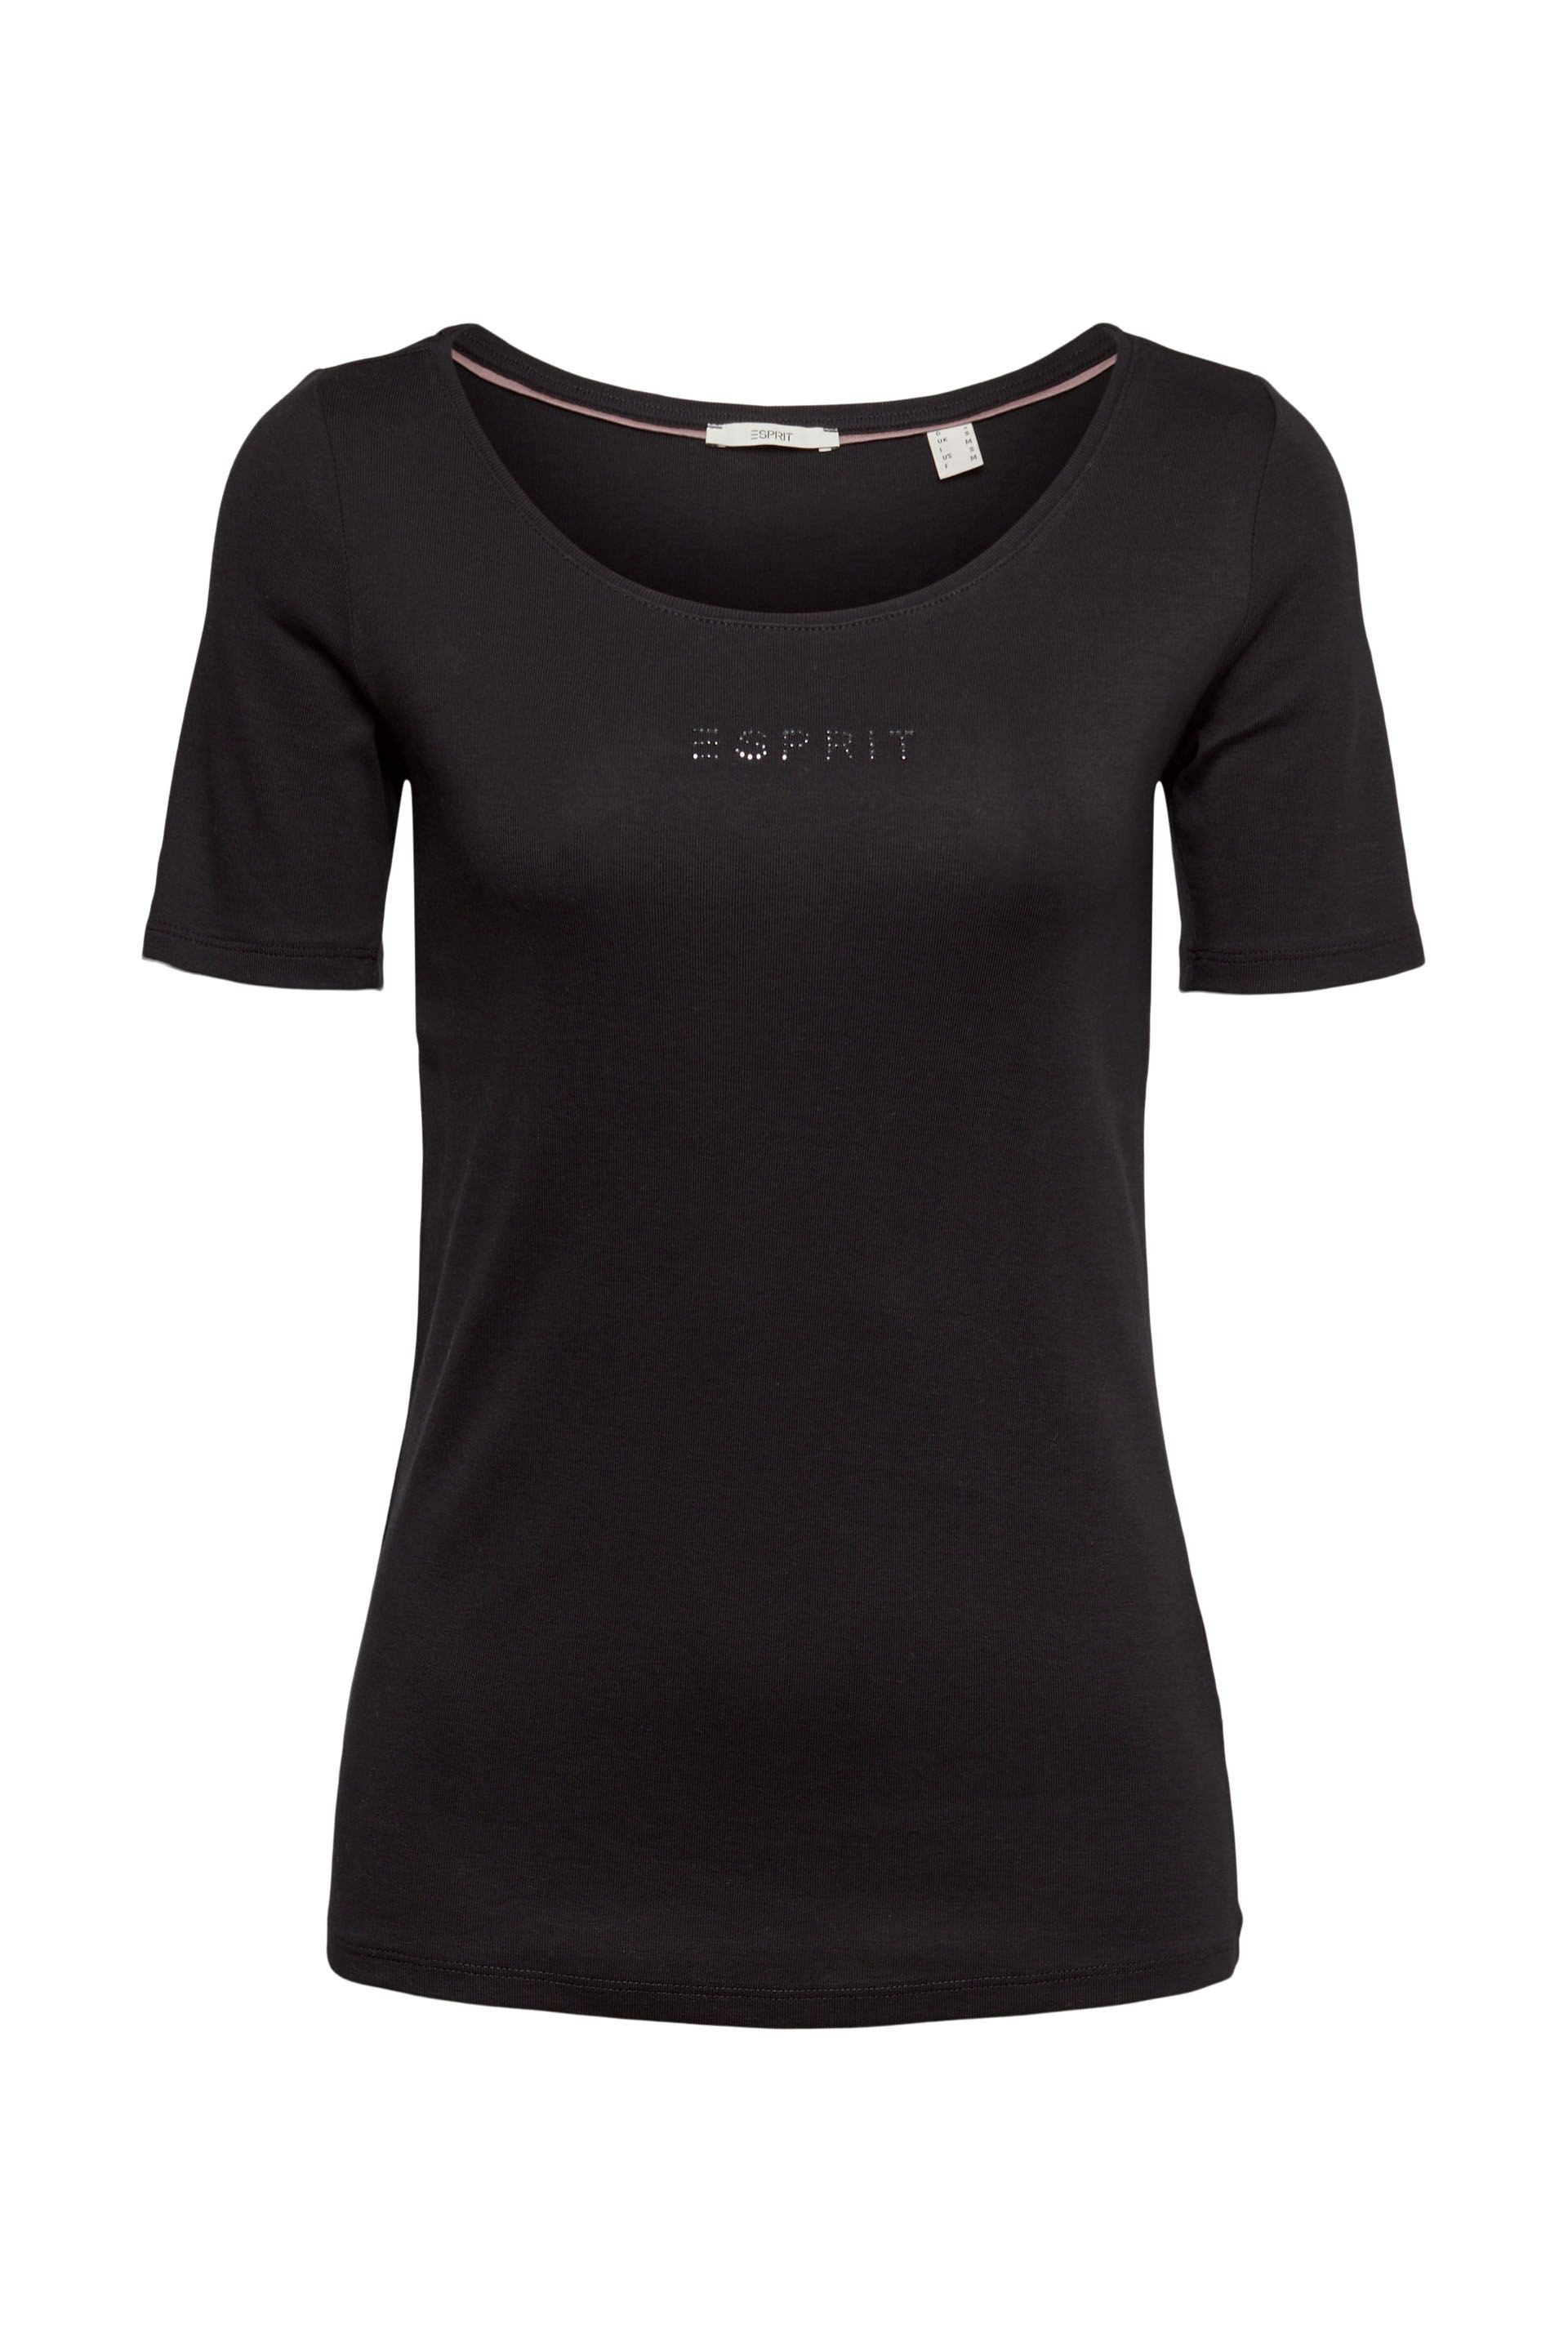 Esprit - T-shirt con logo in cotone, Nero, large image number 0